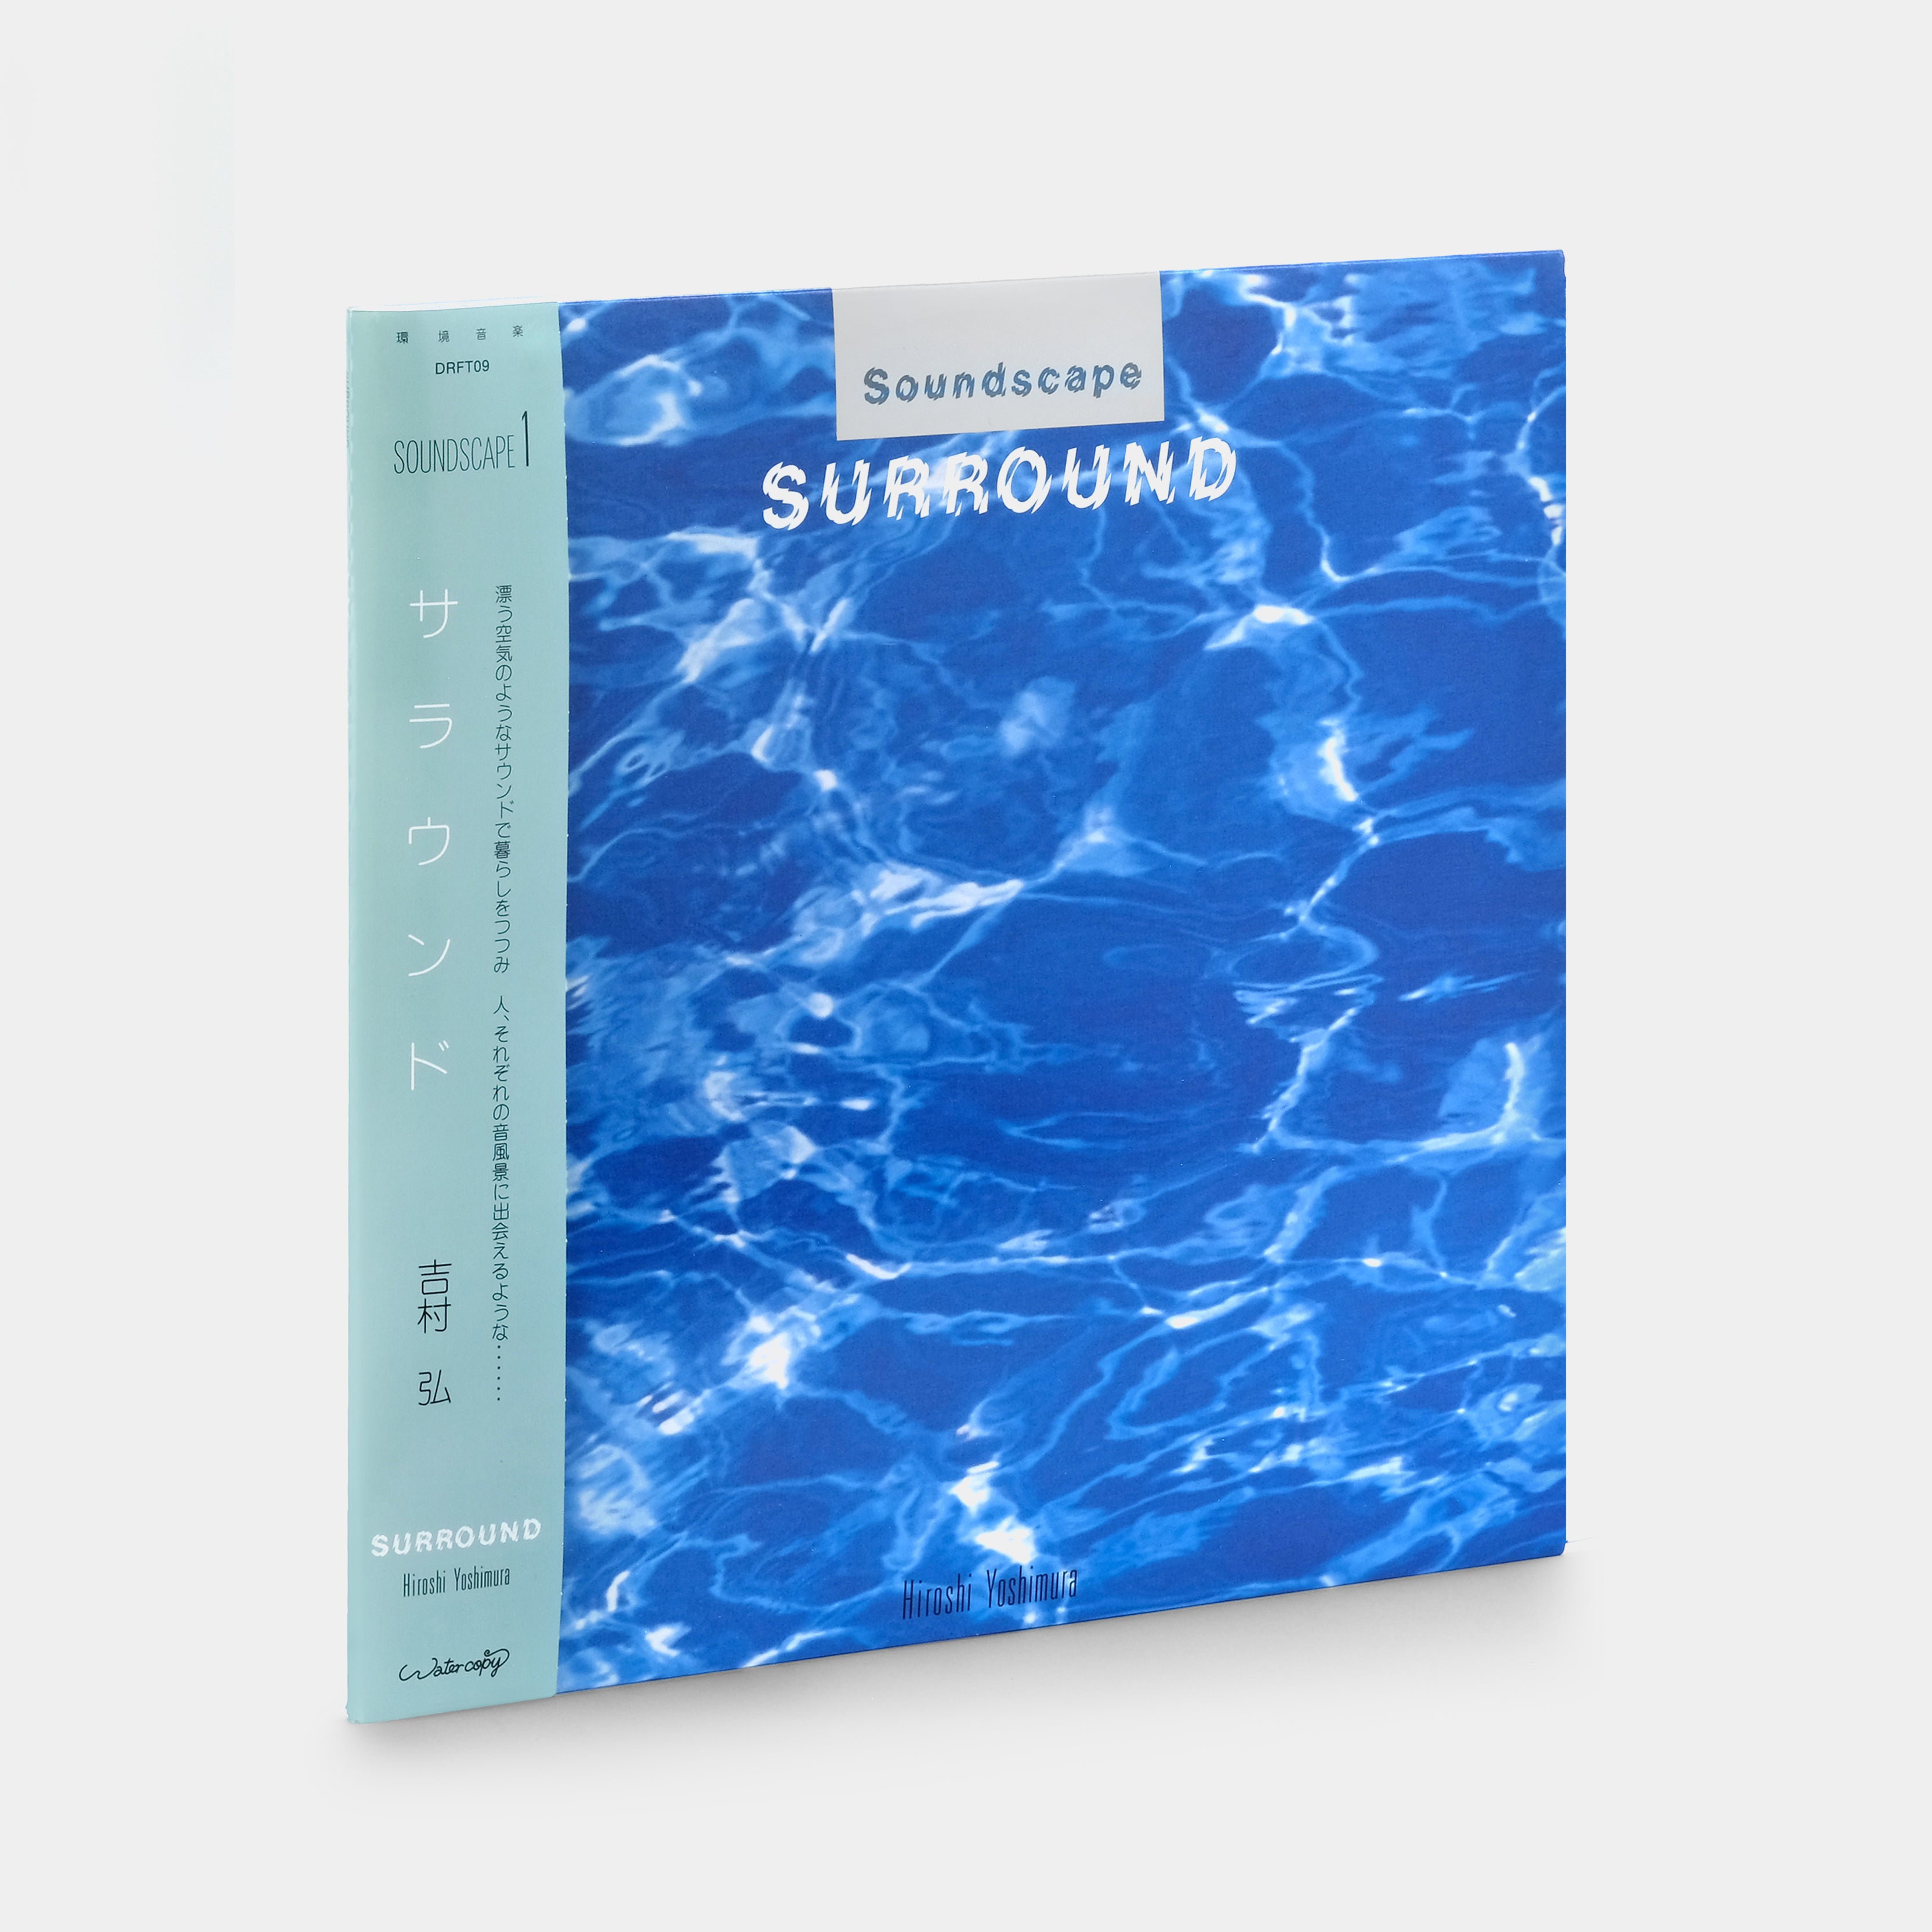 Hiroshi Yoshimura - Soundscape 1: Surround LP Transparent Blue Vinyl Record